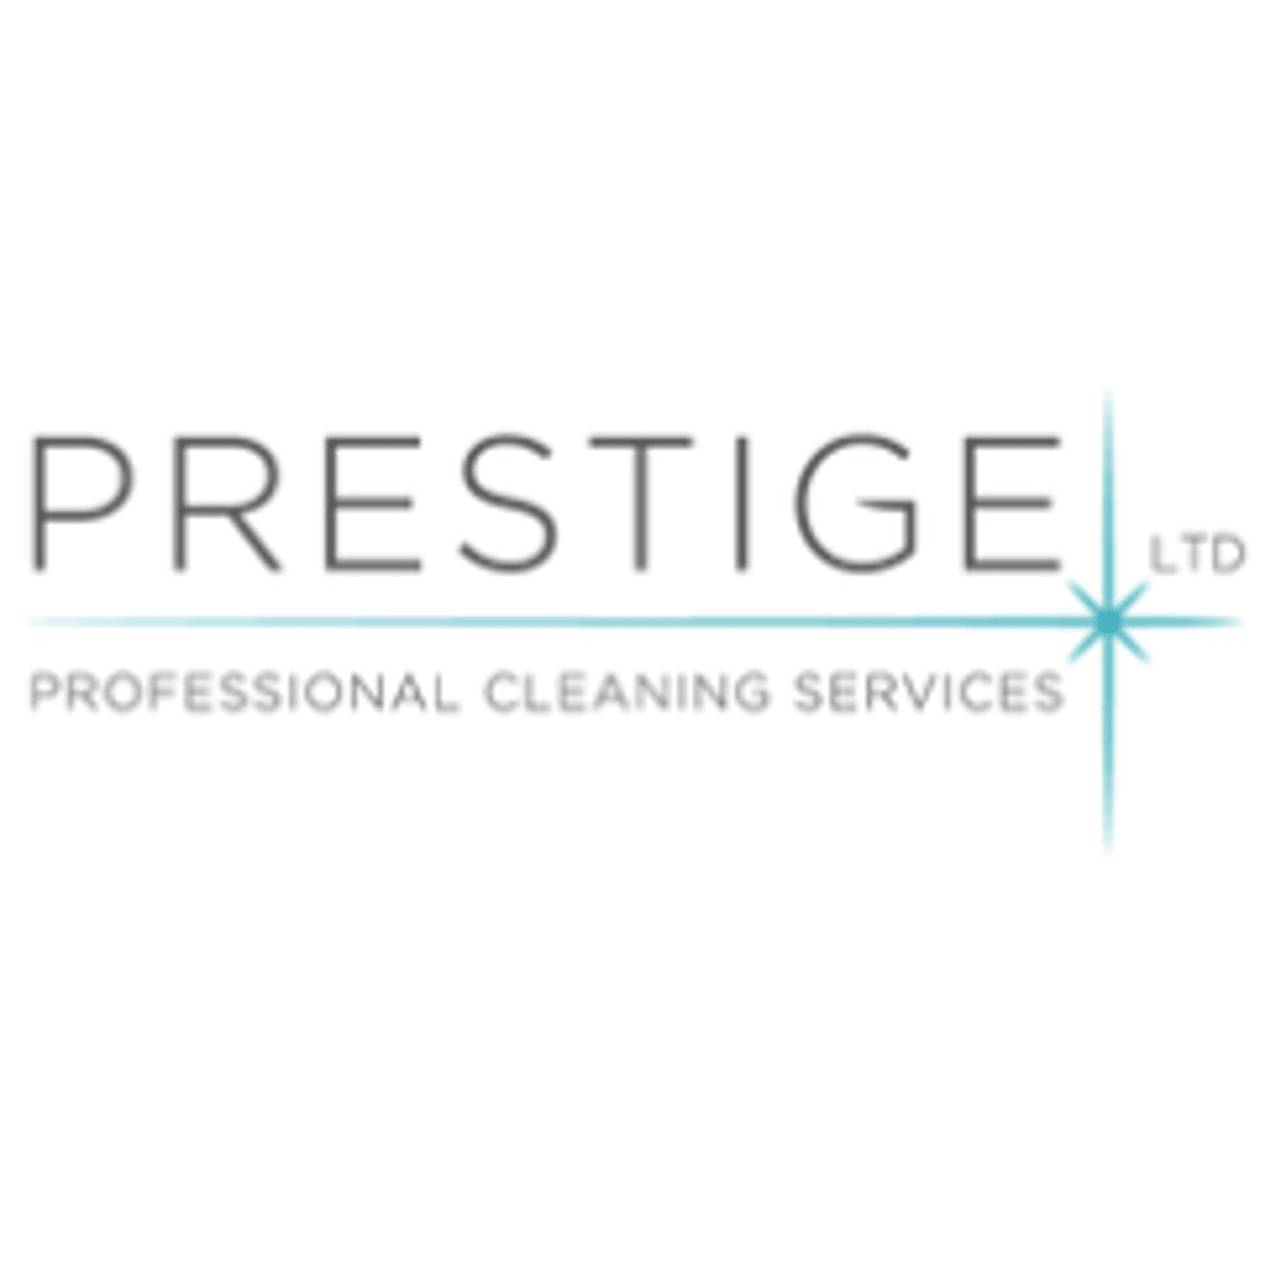 Prestige Professional Cleaning Services Ltd Logo